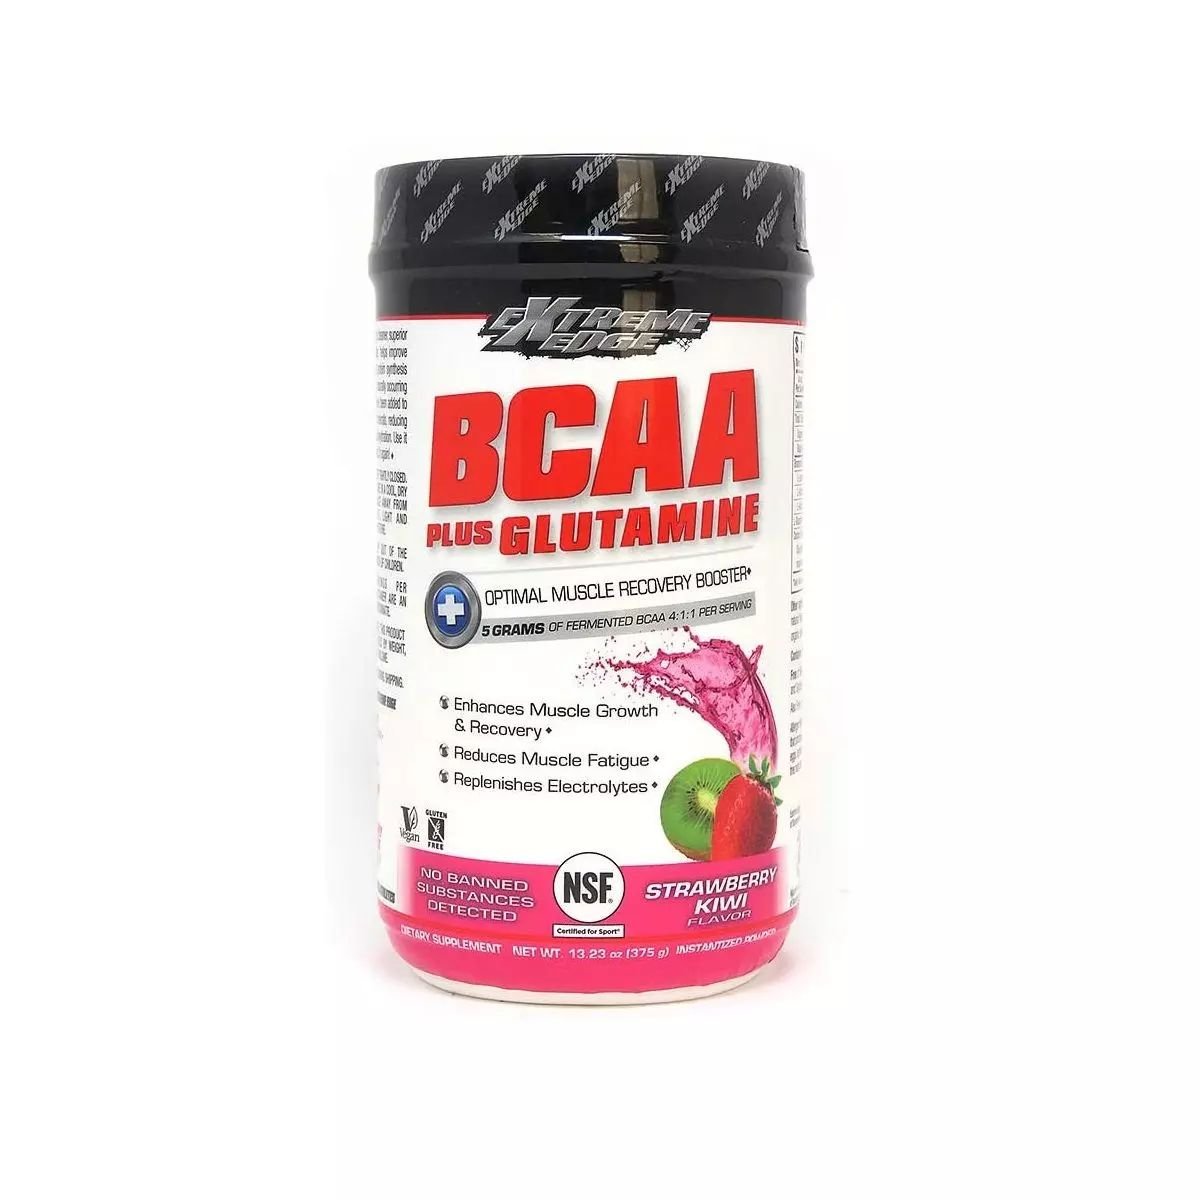 BCAA Bluebonnet Extreme Edge BCAA Plus Glutamine, 375 грамм Клубника-киви,  ml, Bluebonnet Nutrition. BCAA. Weight Loss स्वास्थ्य लाभ Anti-catabolic properties Lean muscle mass 